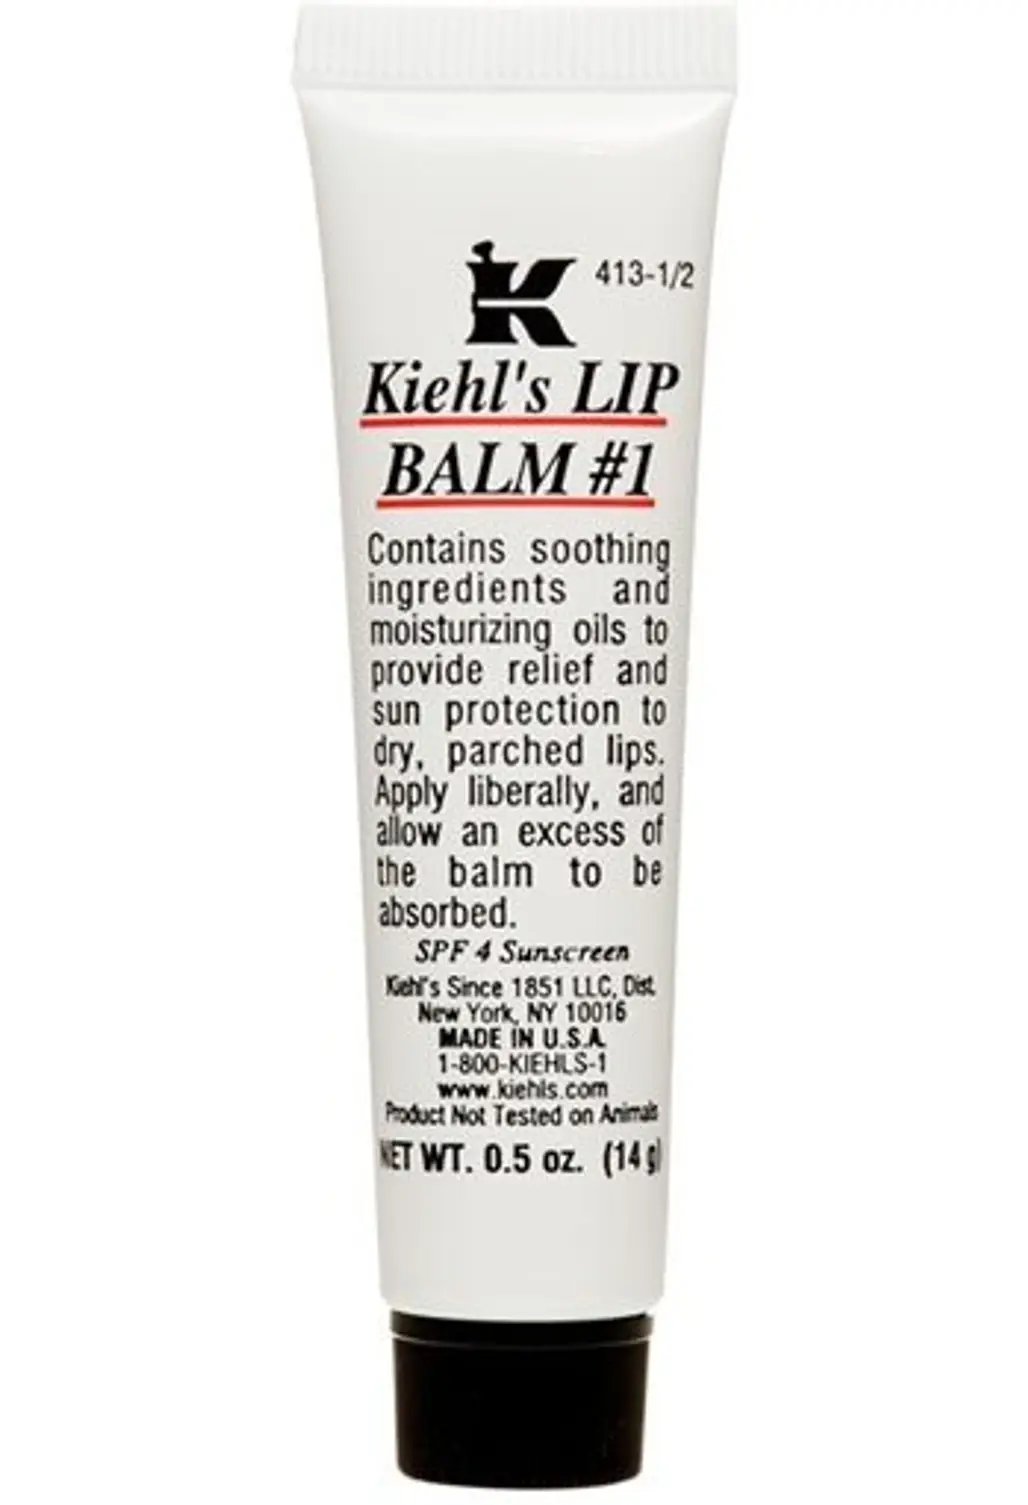 Kiehl’s Lip Balm #1